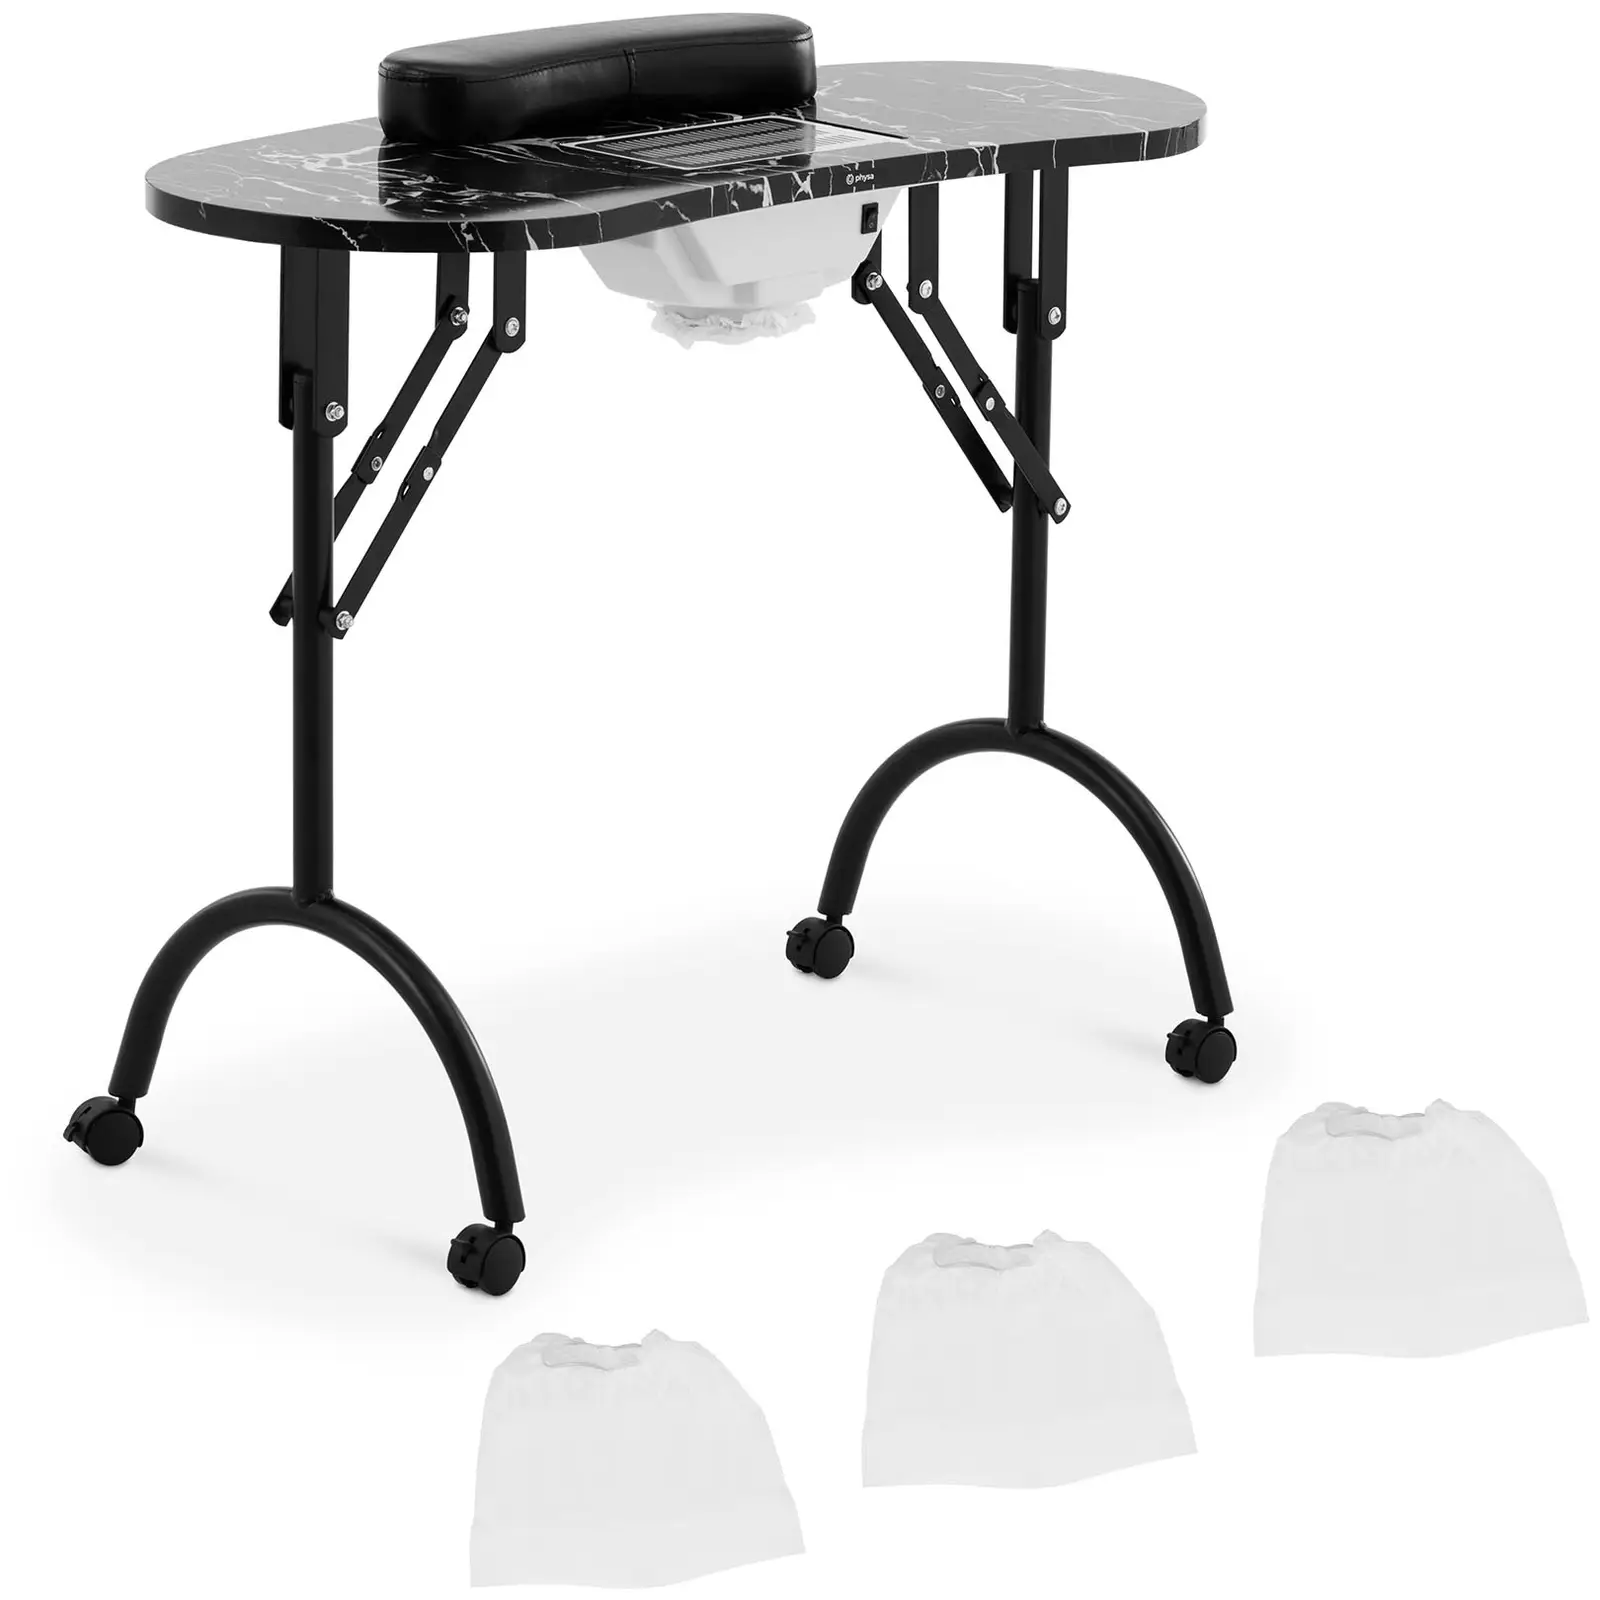 Nail Desk - foldable - Black - 4 wheels - extraction